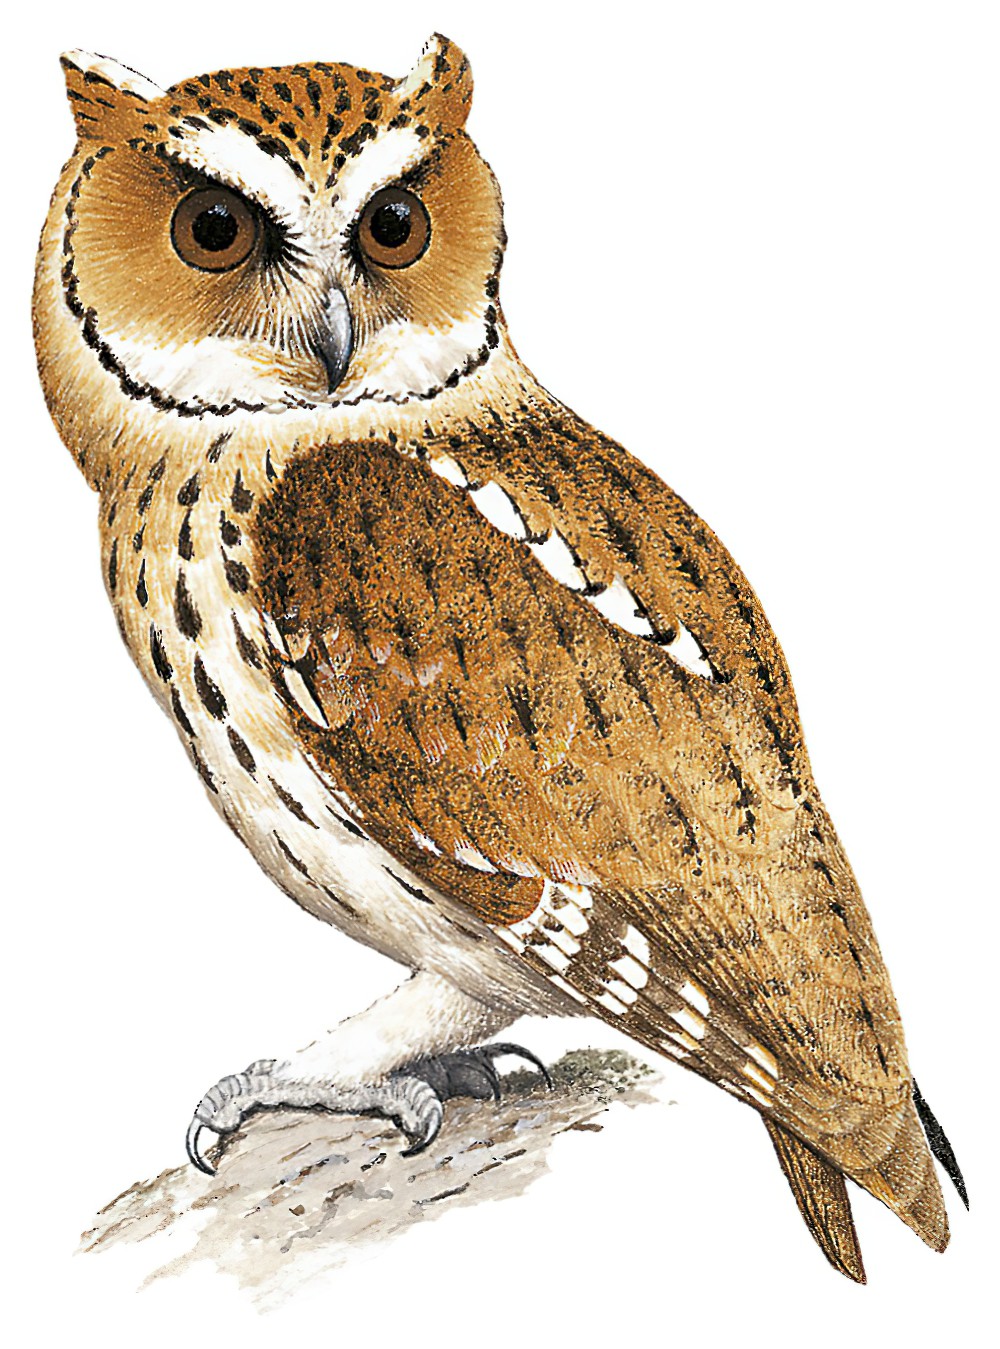 Giant Scops-Owl / Otus gurneyi